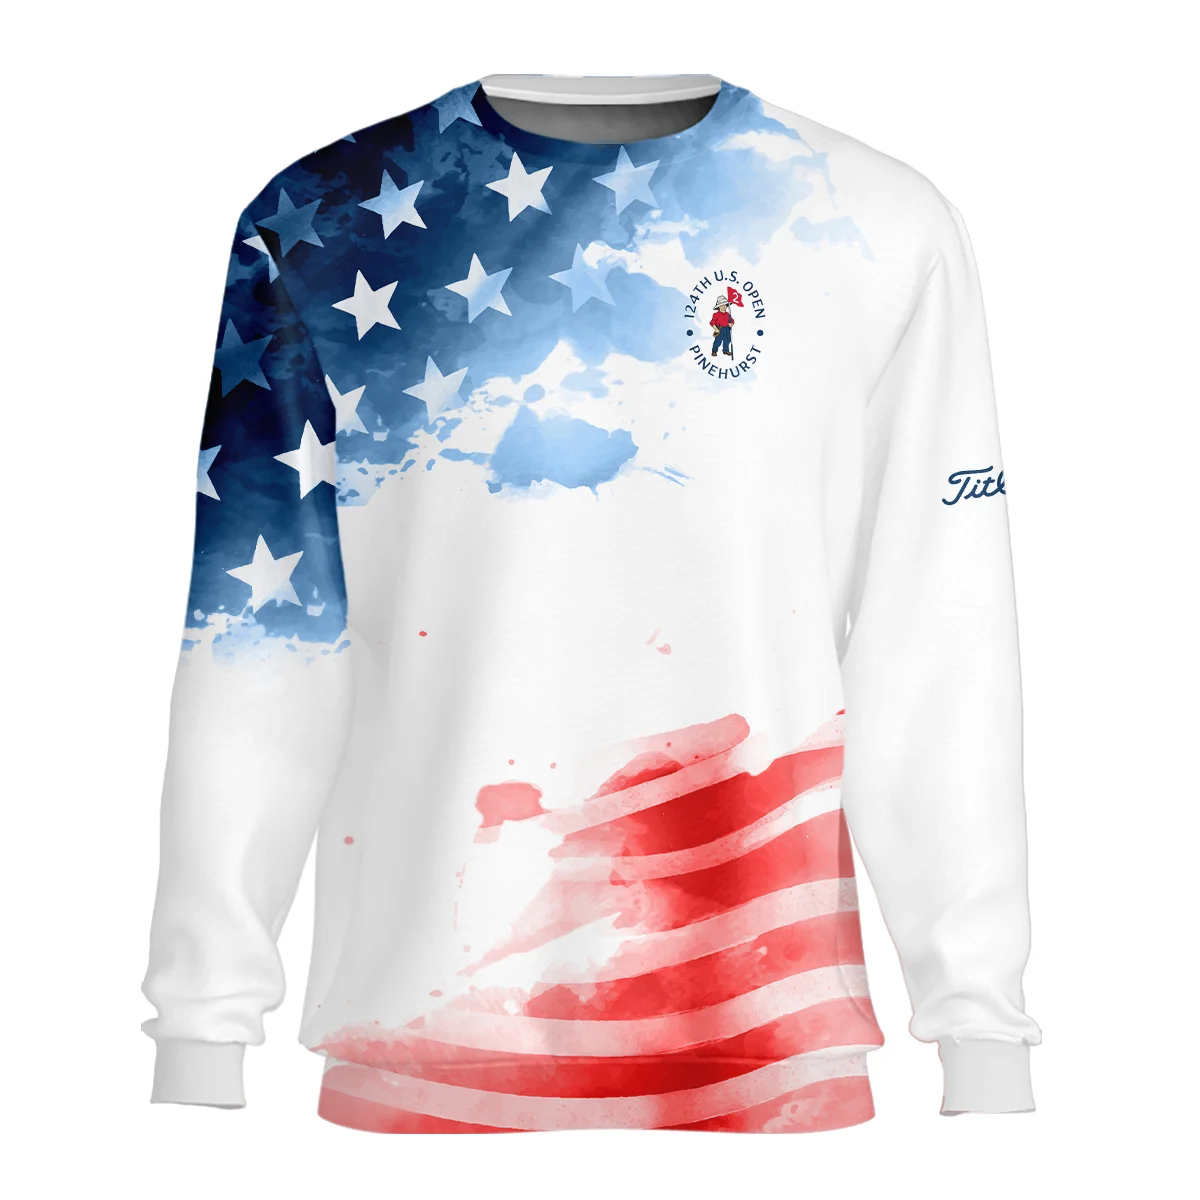 Golf 124th U.S. Open Pinehurst Titleist Unisex T-Shirt US Flag Watercolor Golf Sports All Over Print T-Shirt